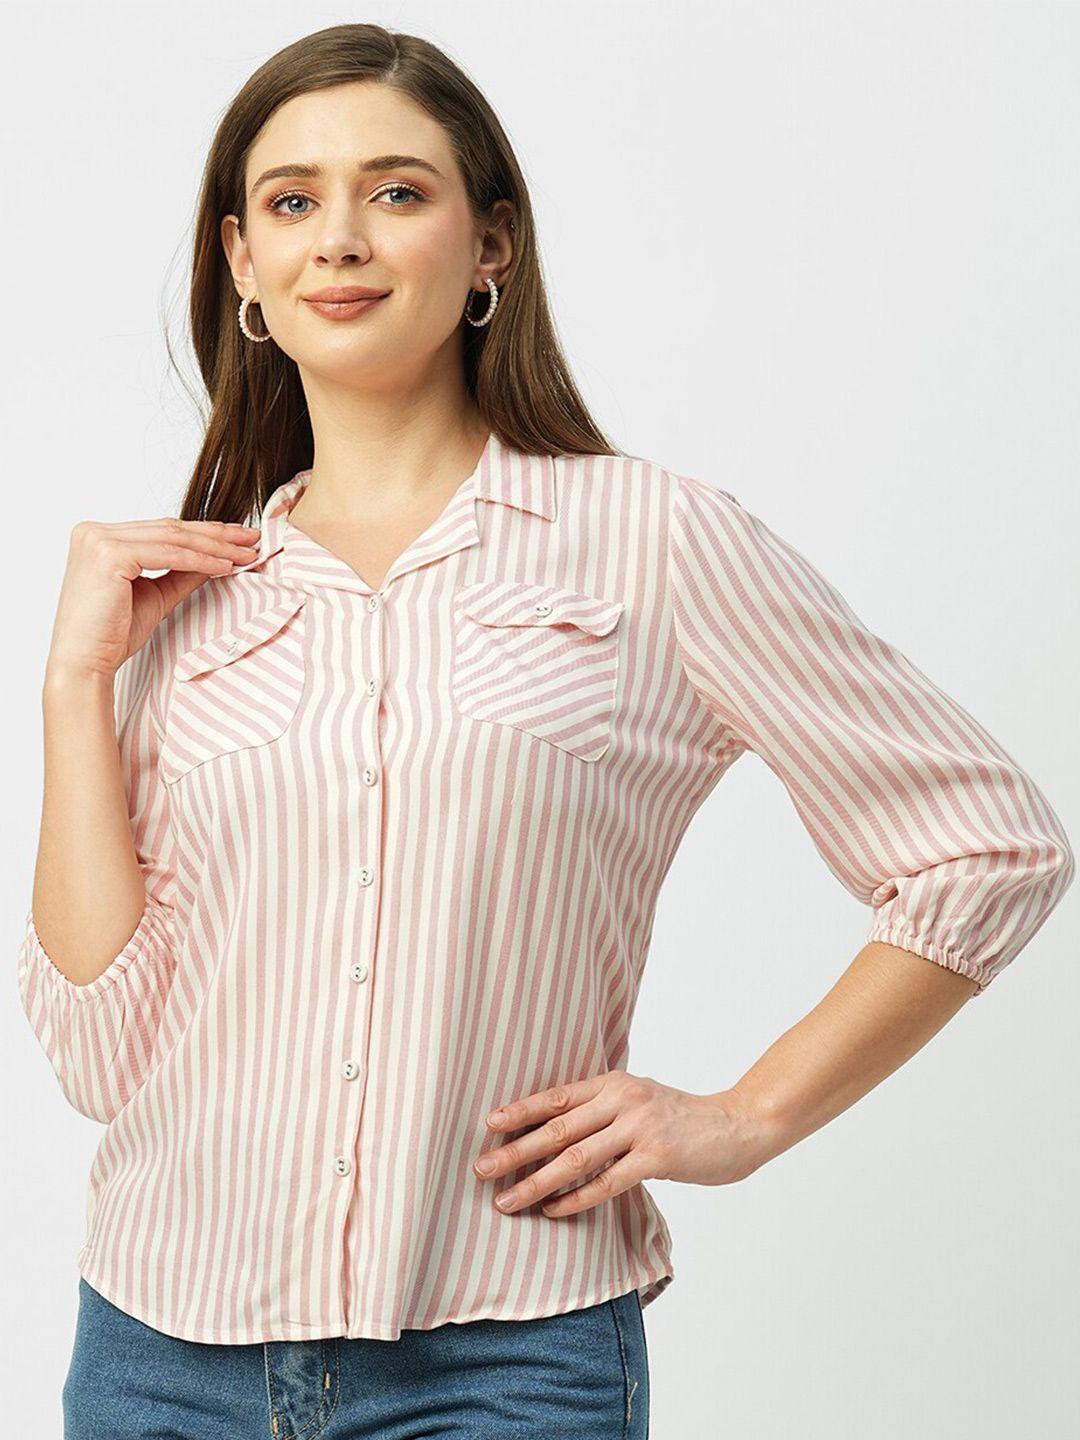 kraus jeans lapel collar three quarter sleeves slim fit opaque striped casual shirt